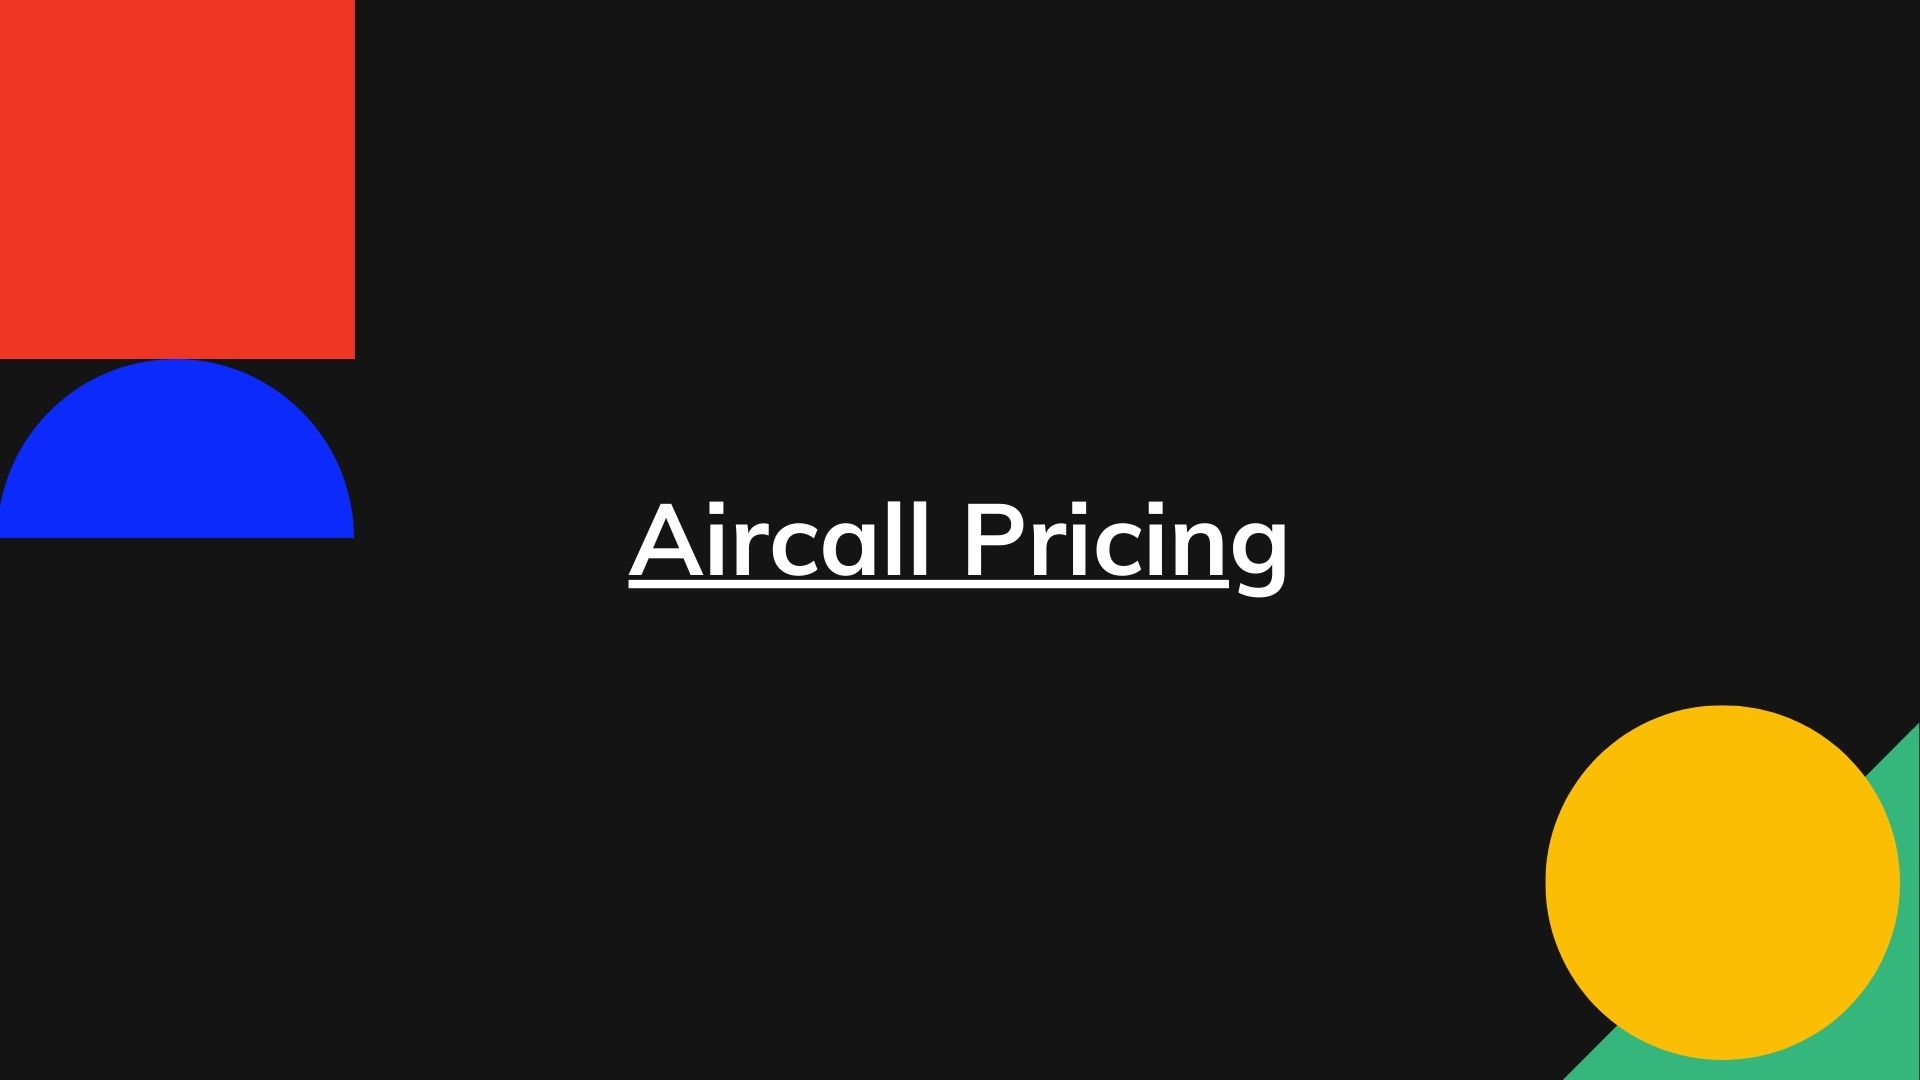 Aircall Pricing